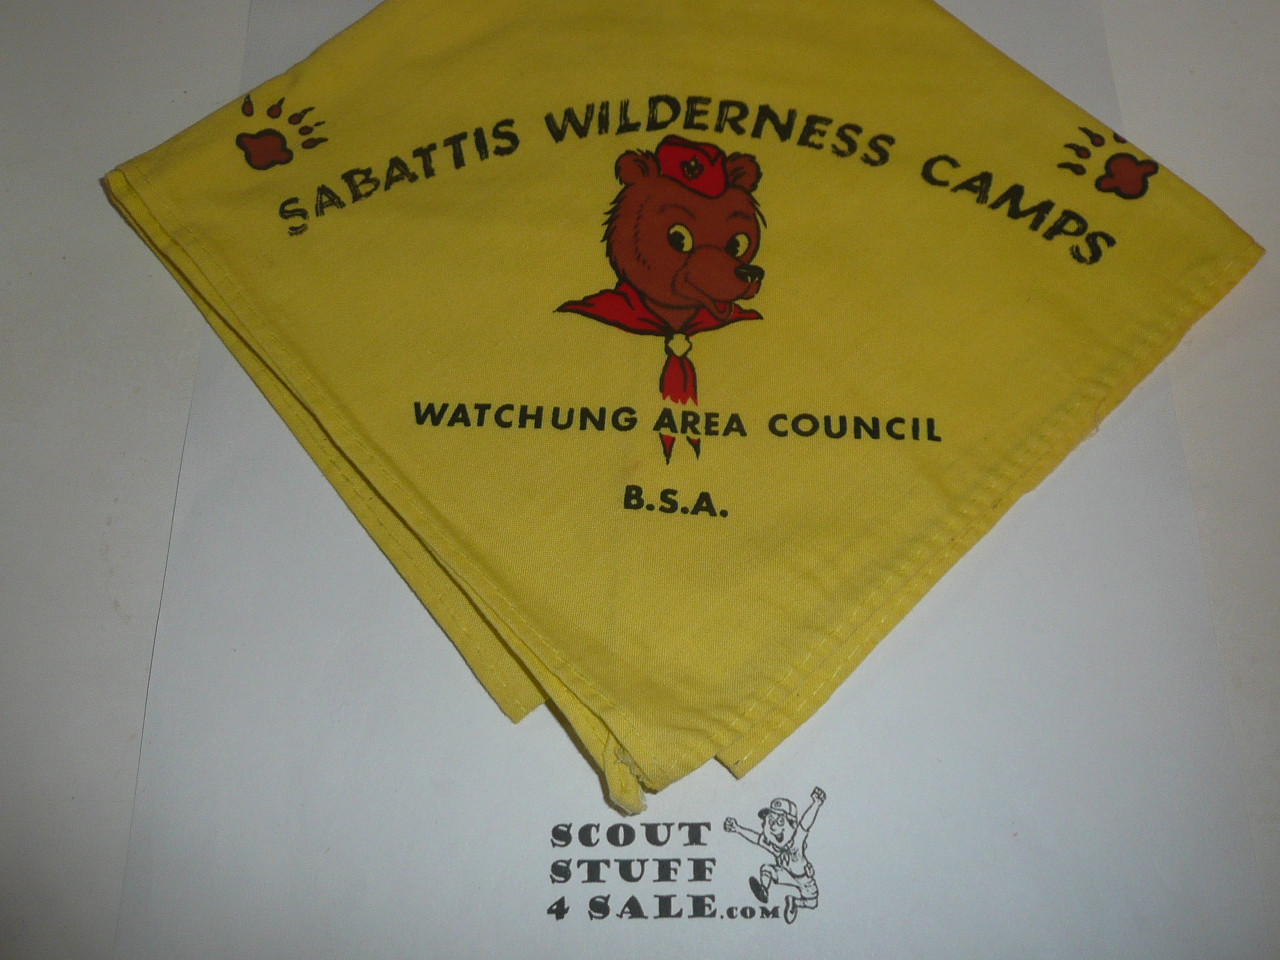 Sabattis Wilderness Camp Neckerchief, Watchung Area Council, yellow